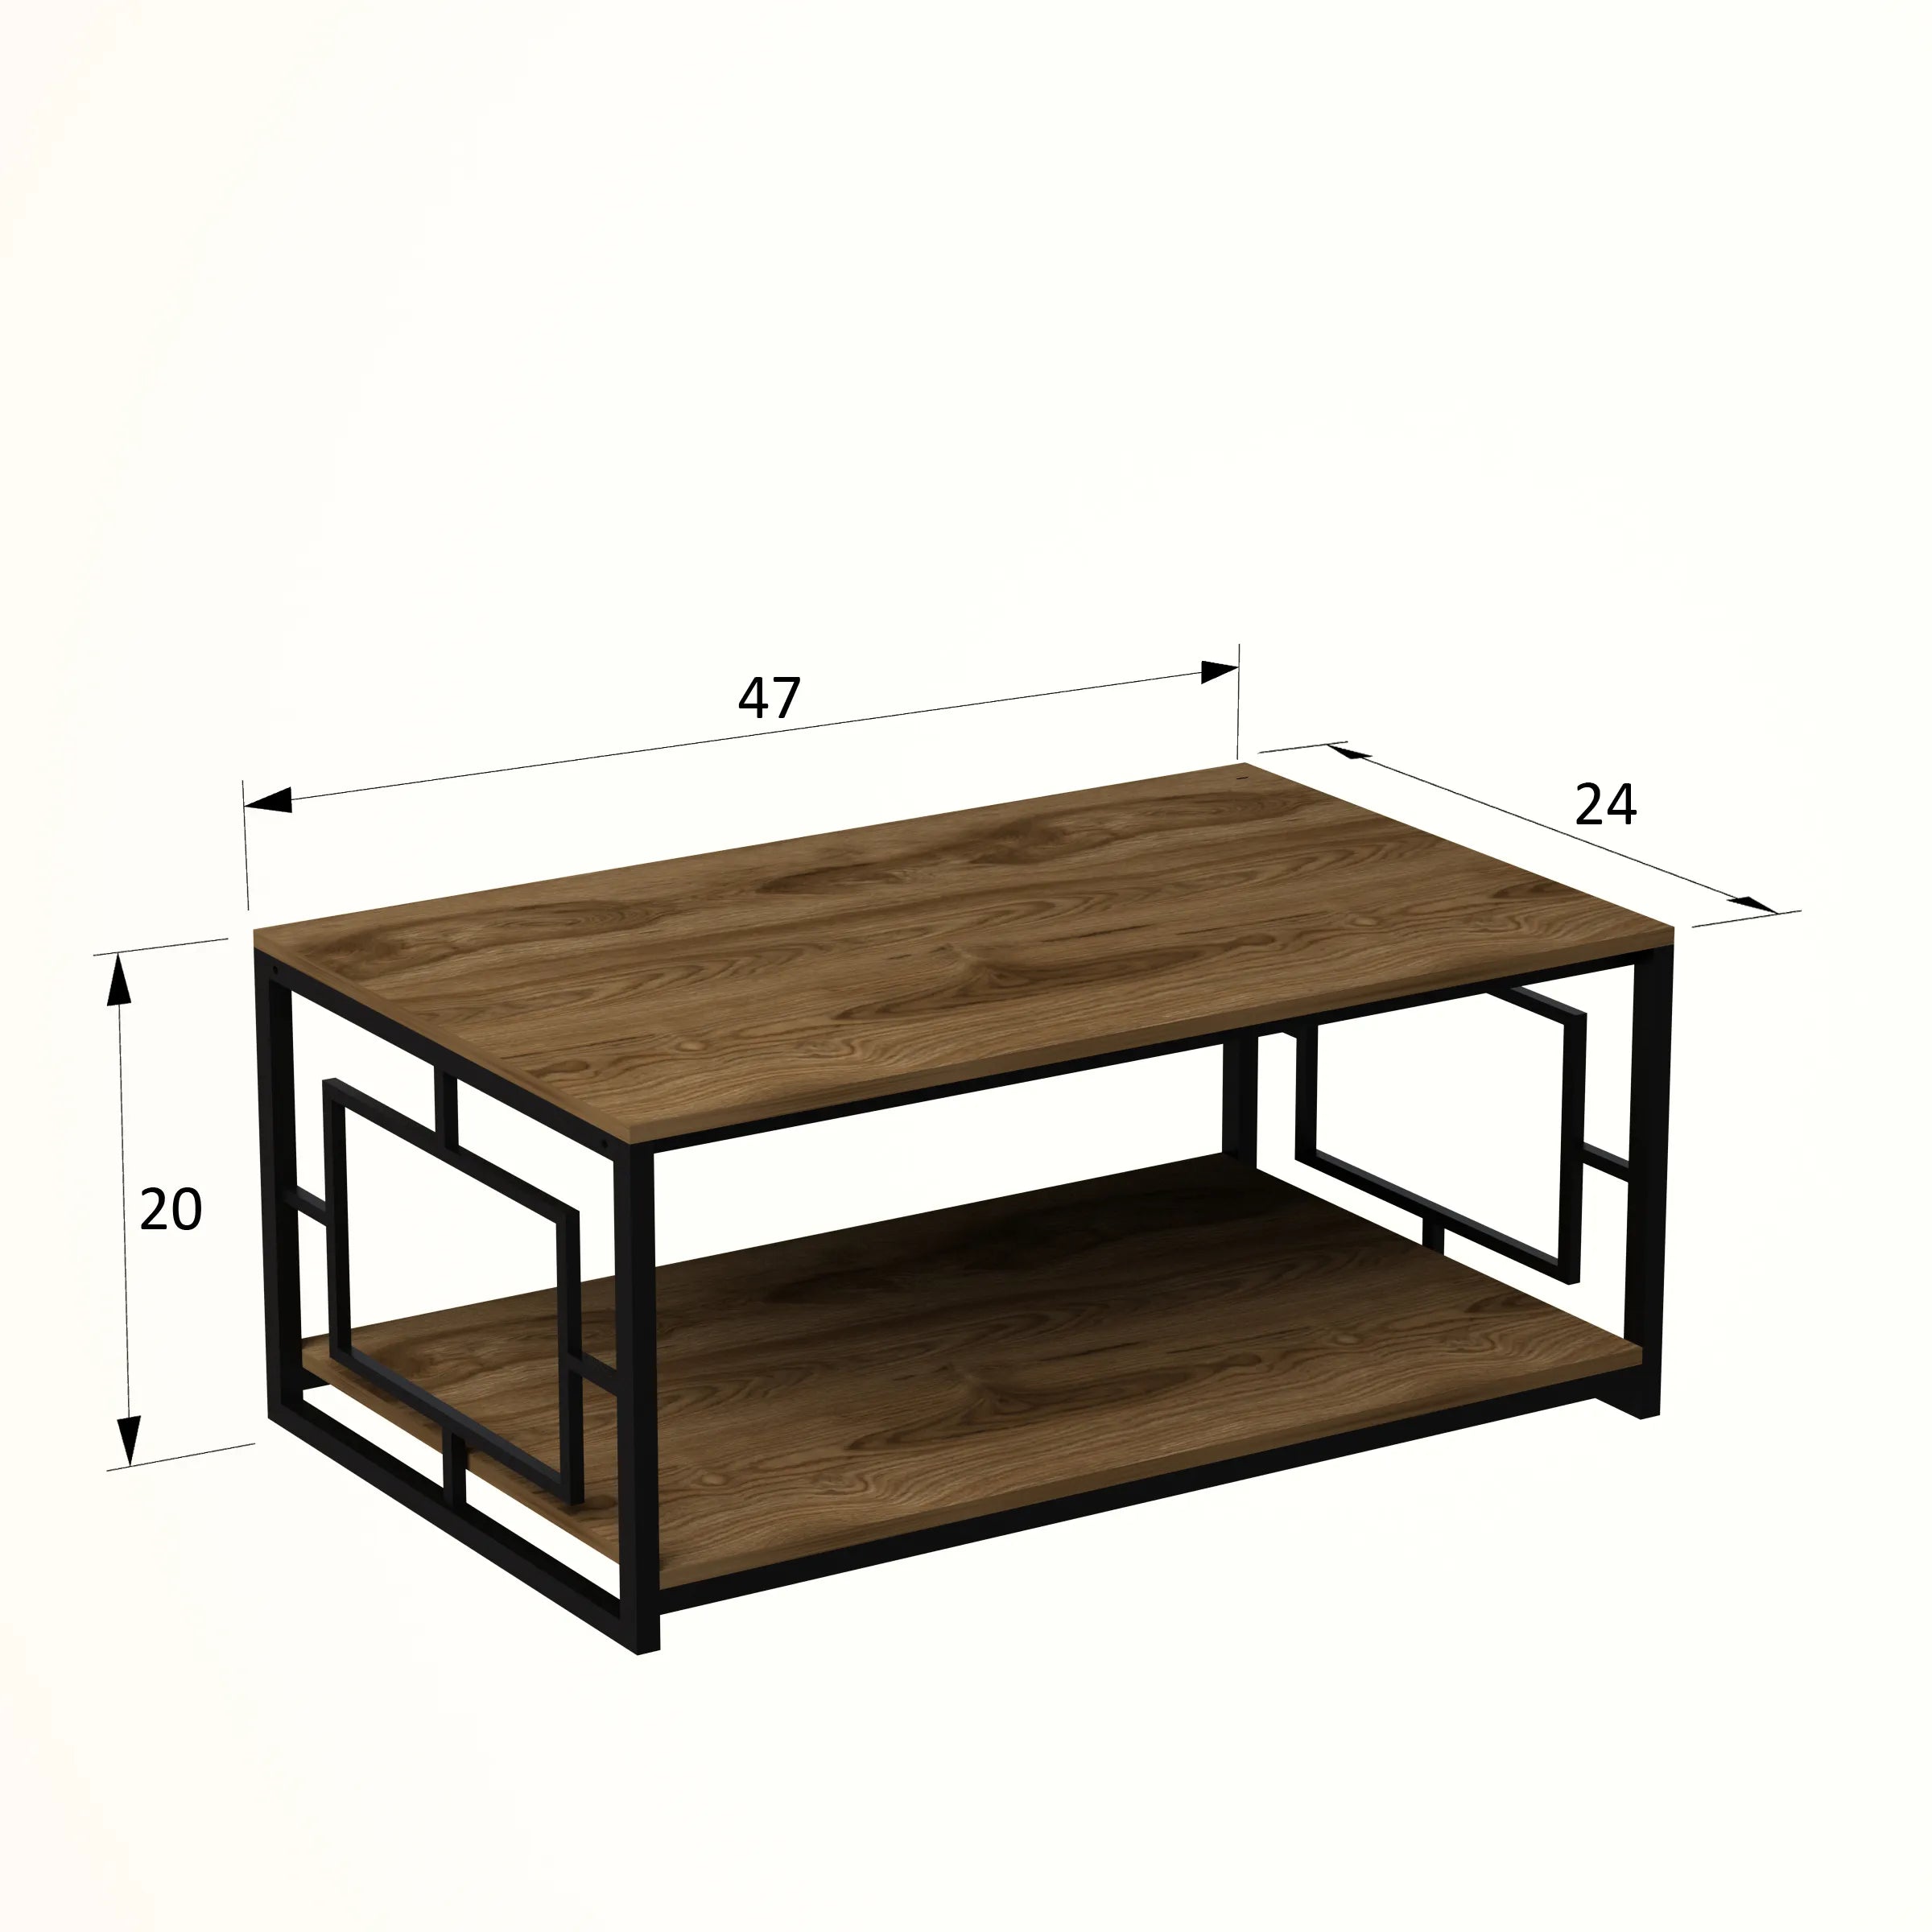 Kelvin 47" Wide Industrial Metal Frame Coffee Table | Cocktail Table